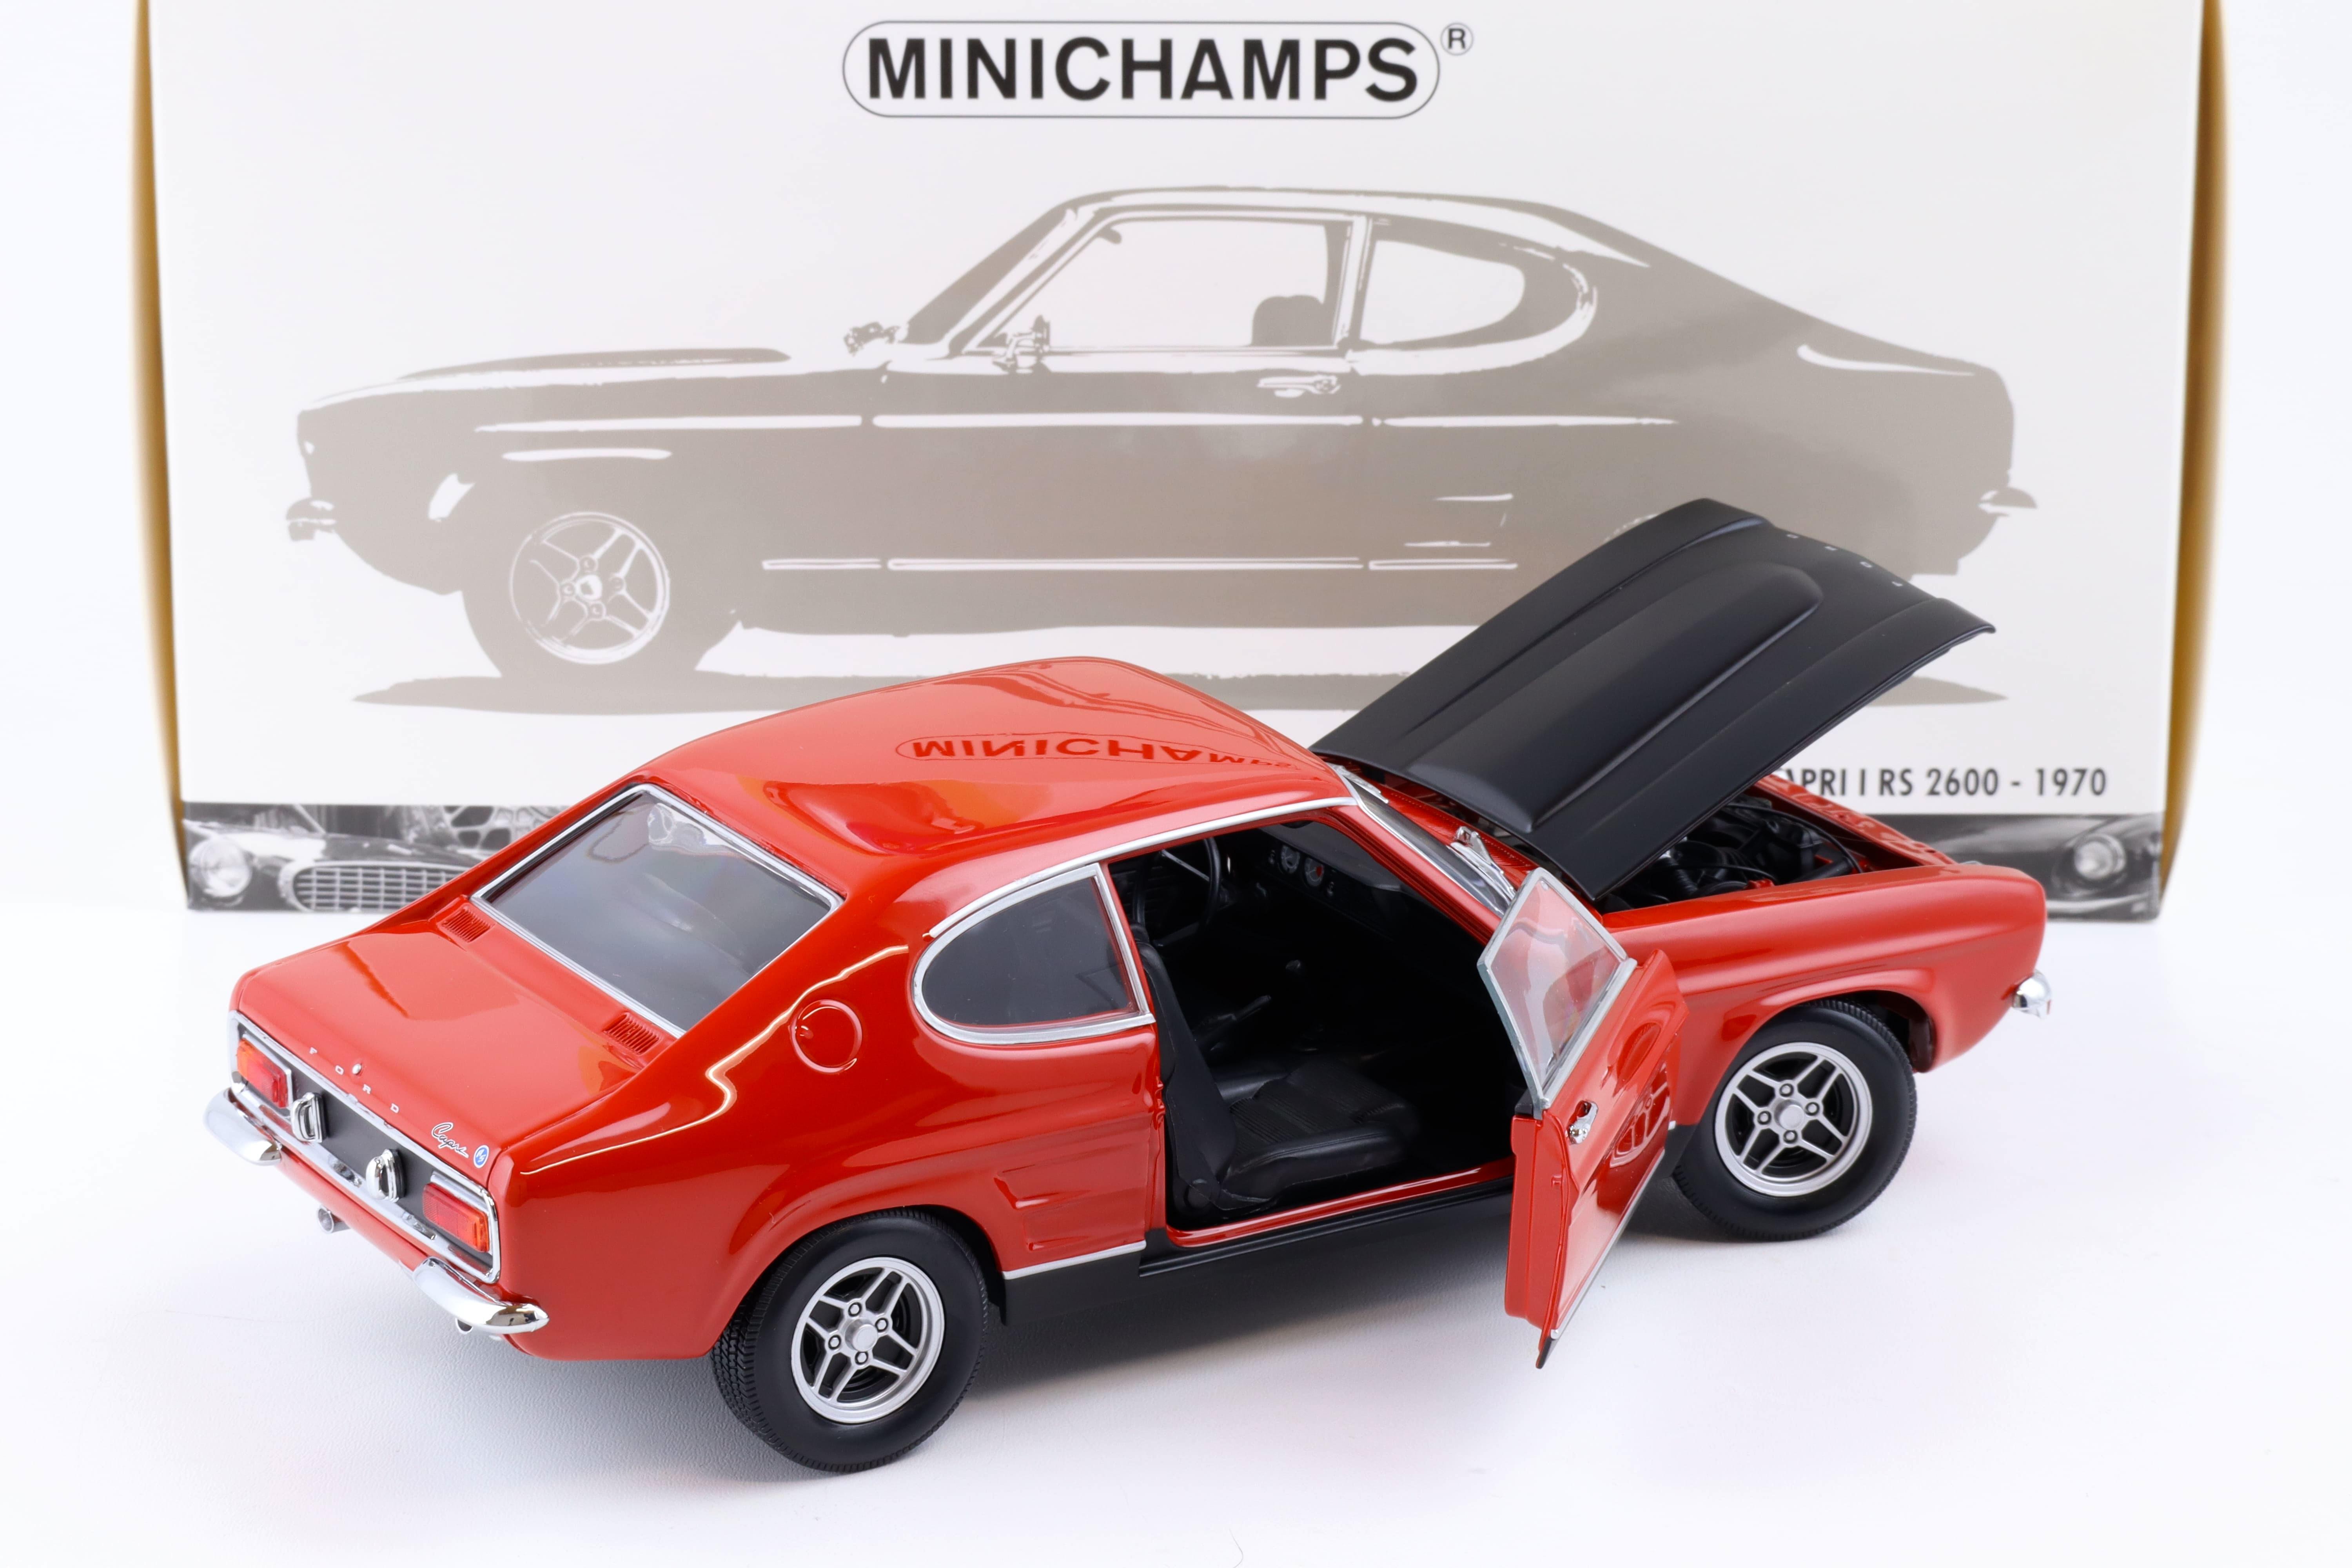 1:18 Minichamps Ford Capri I RS 2600 red/black 1970 